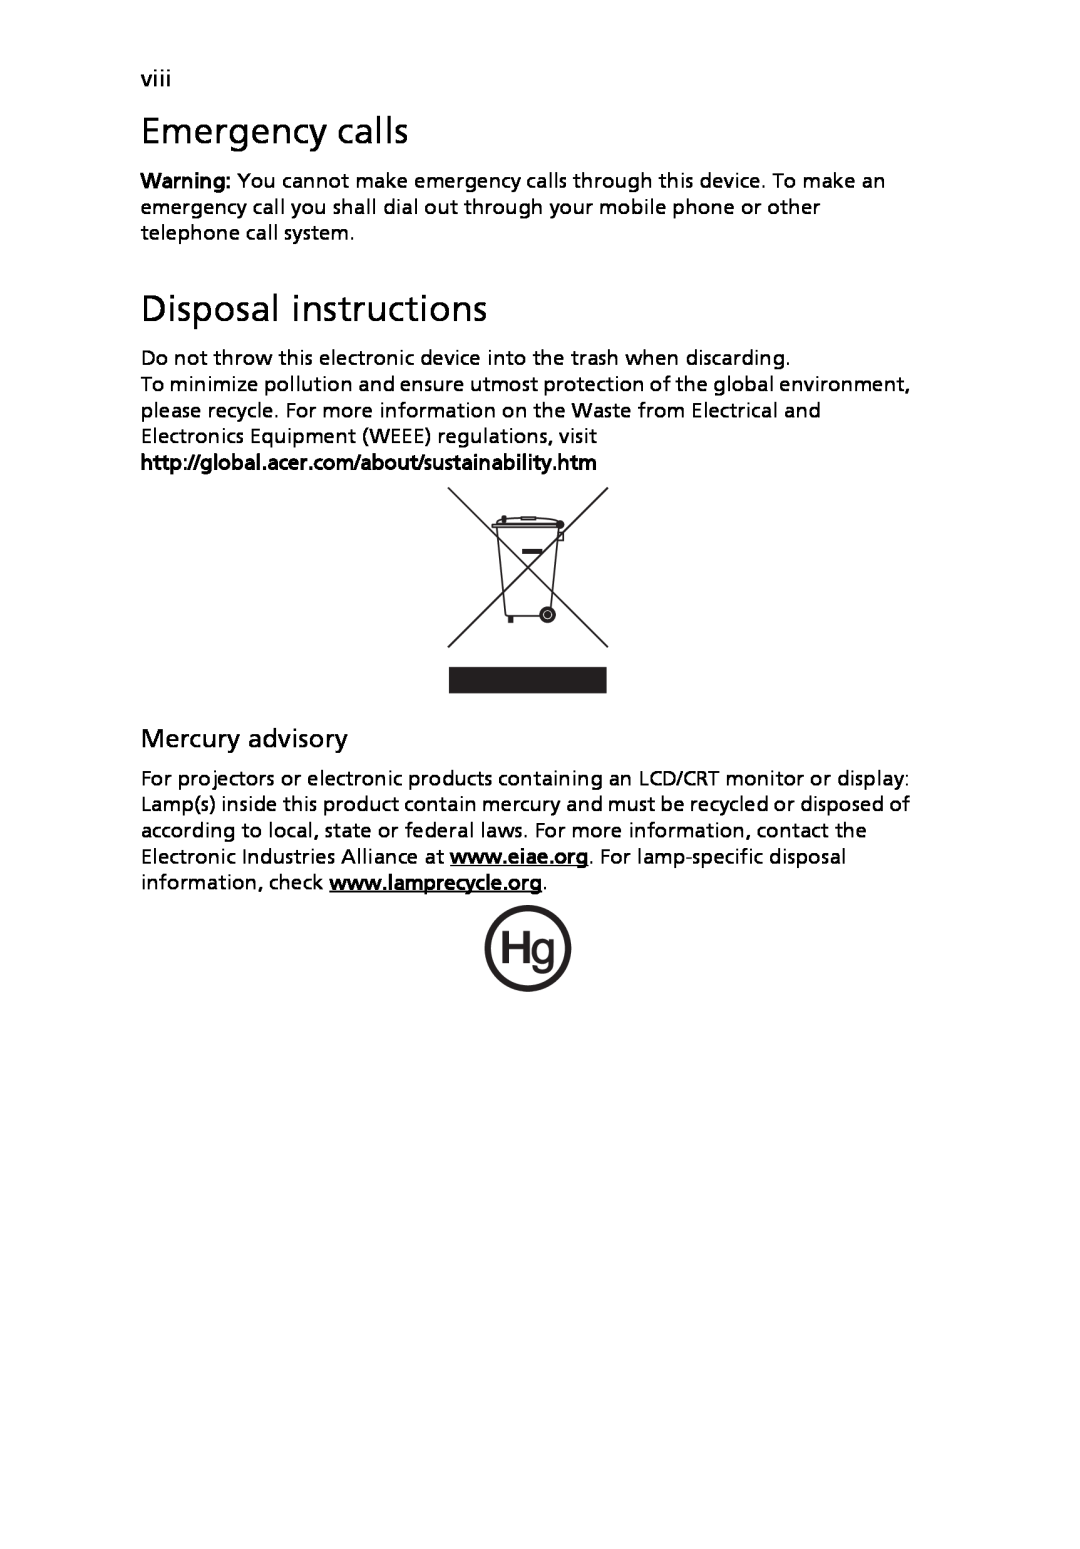 Acer 9120 manual Emergency calls, Disposal instructions, Mercury advisory 